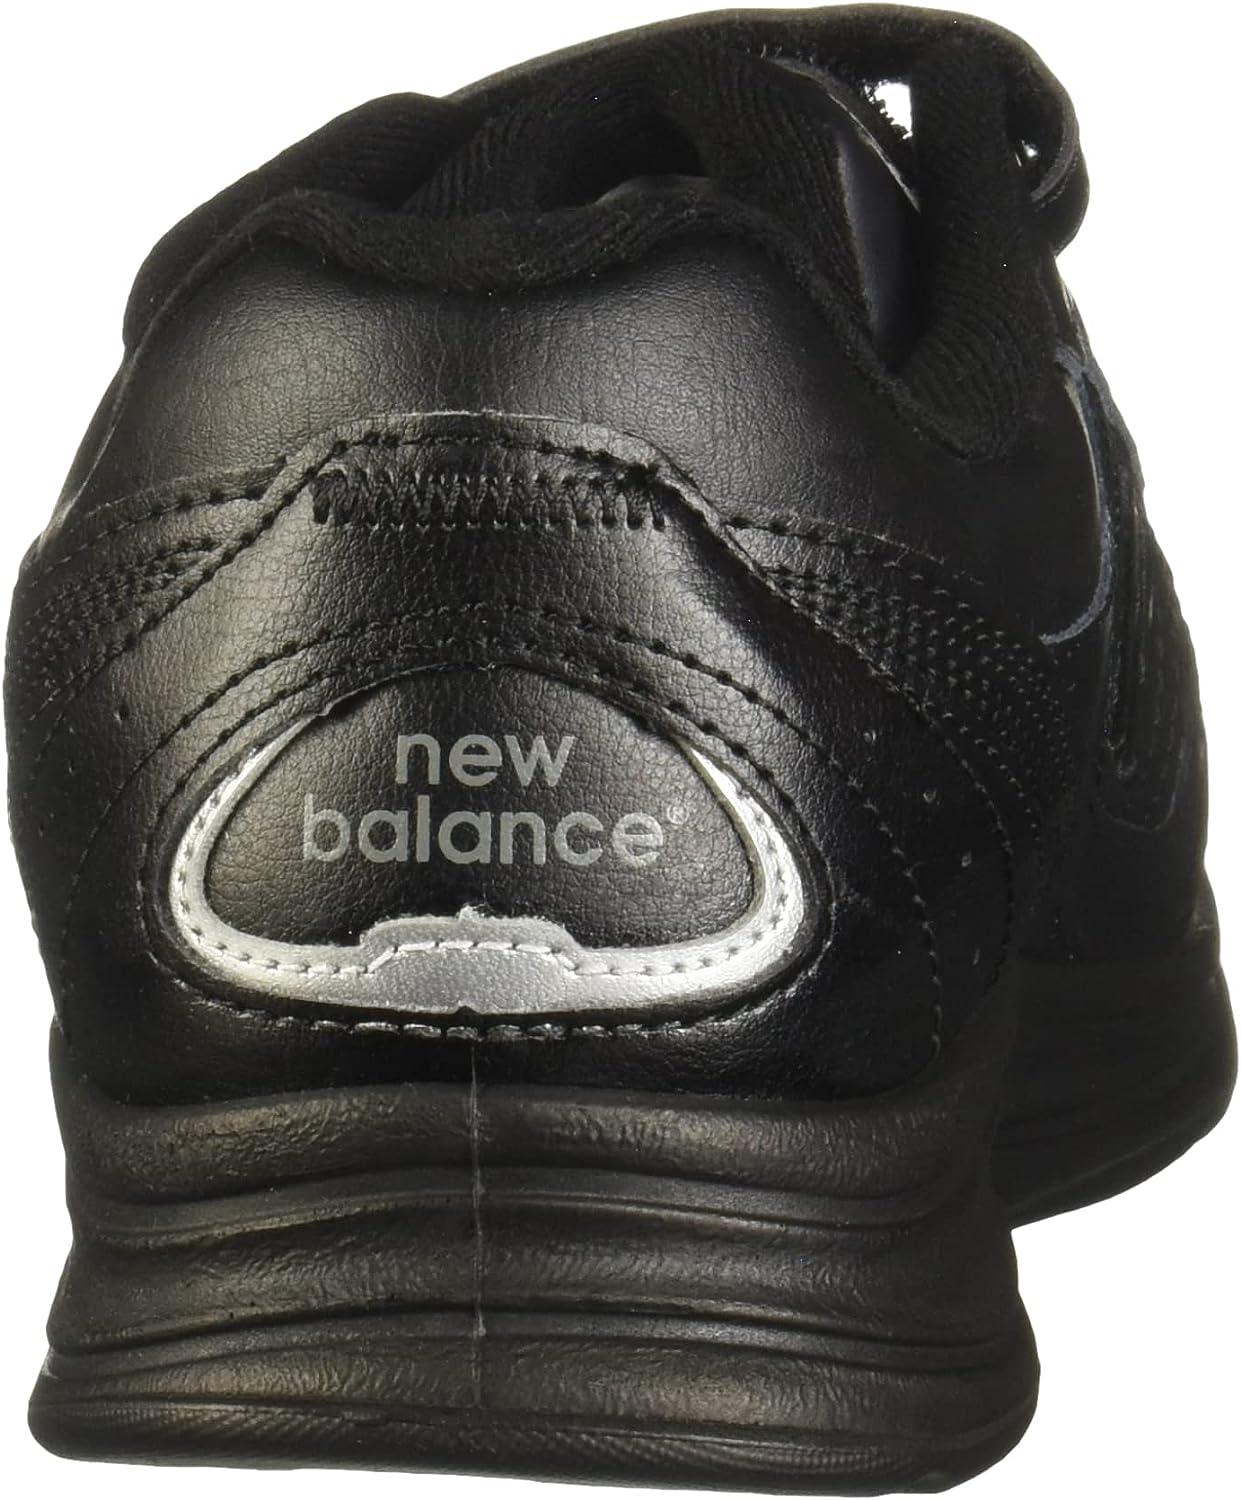 New Balance Men's 577 Walking Shoes